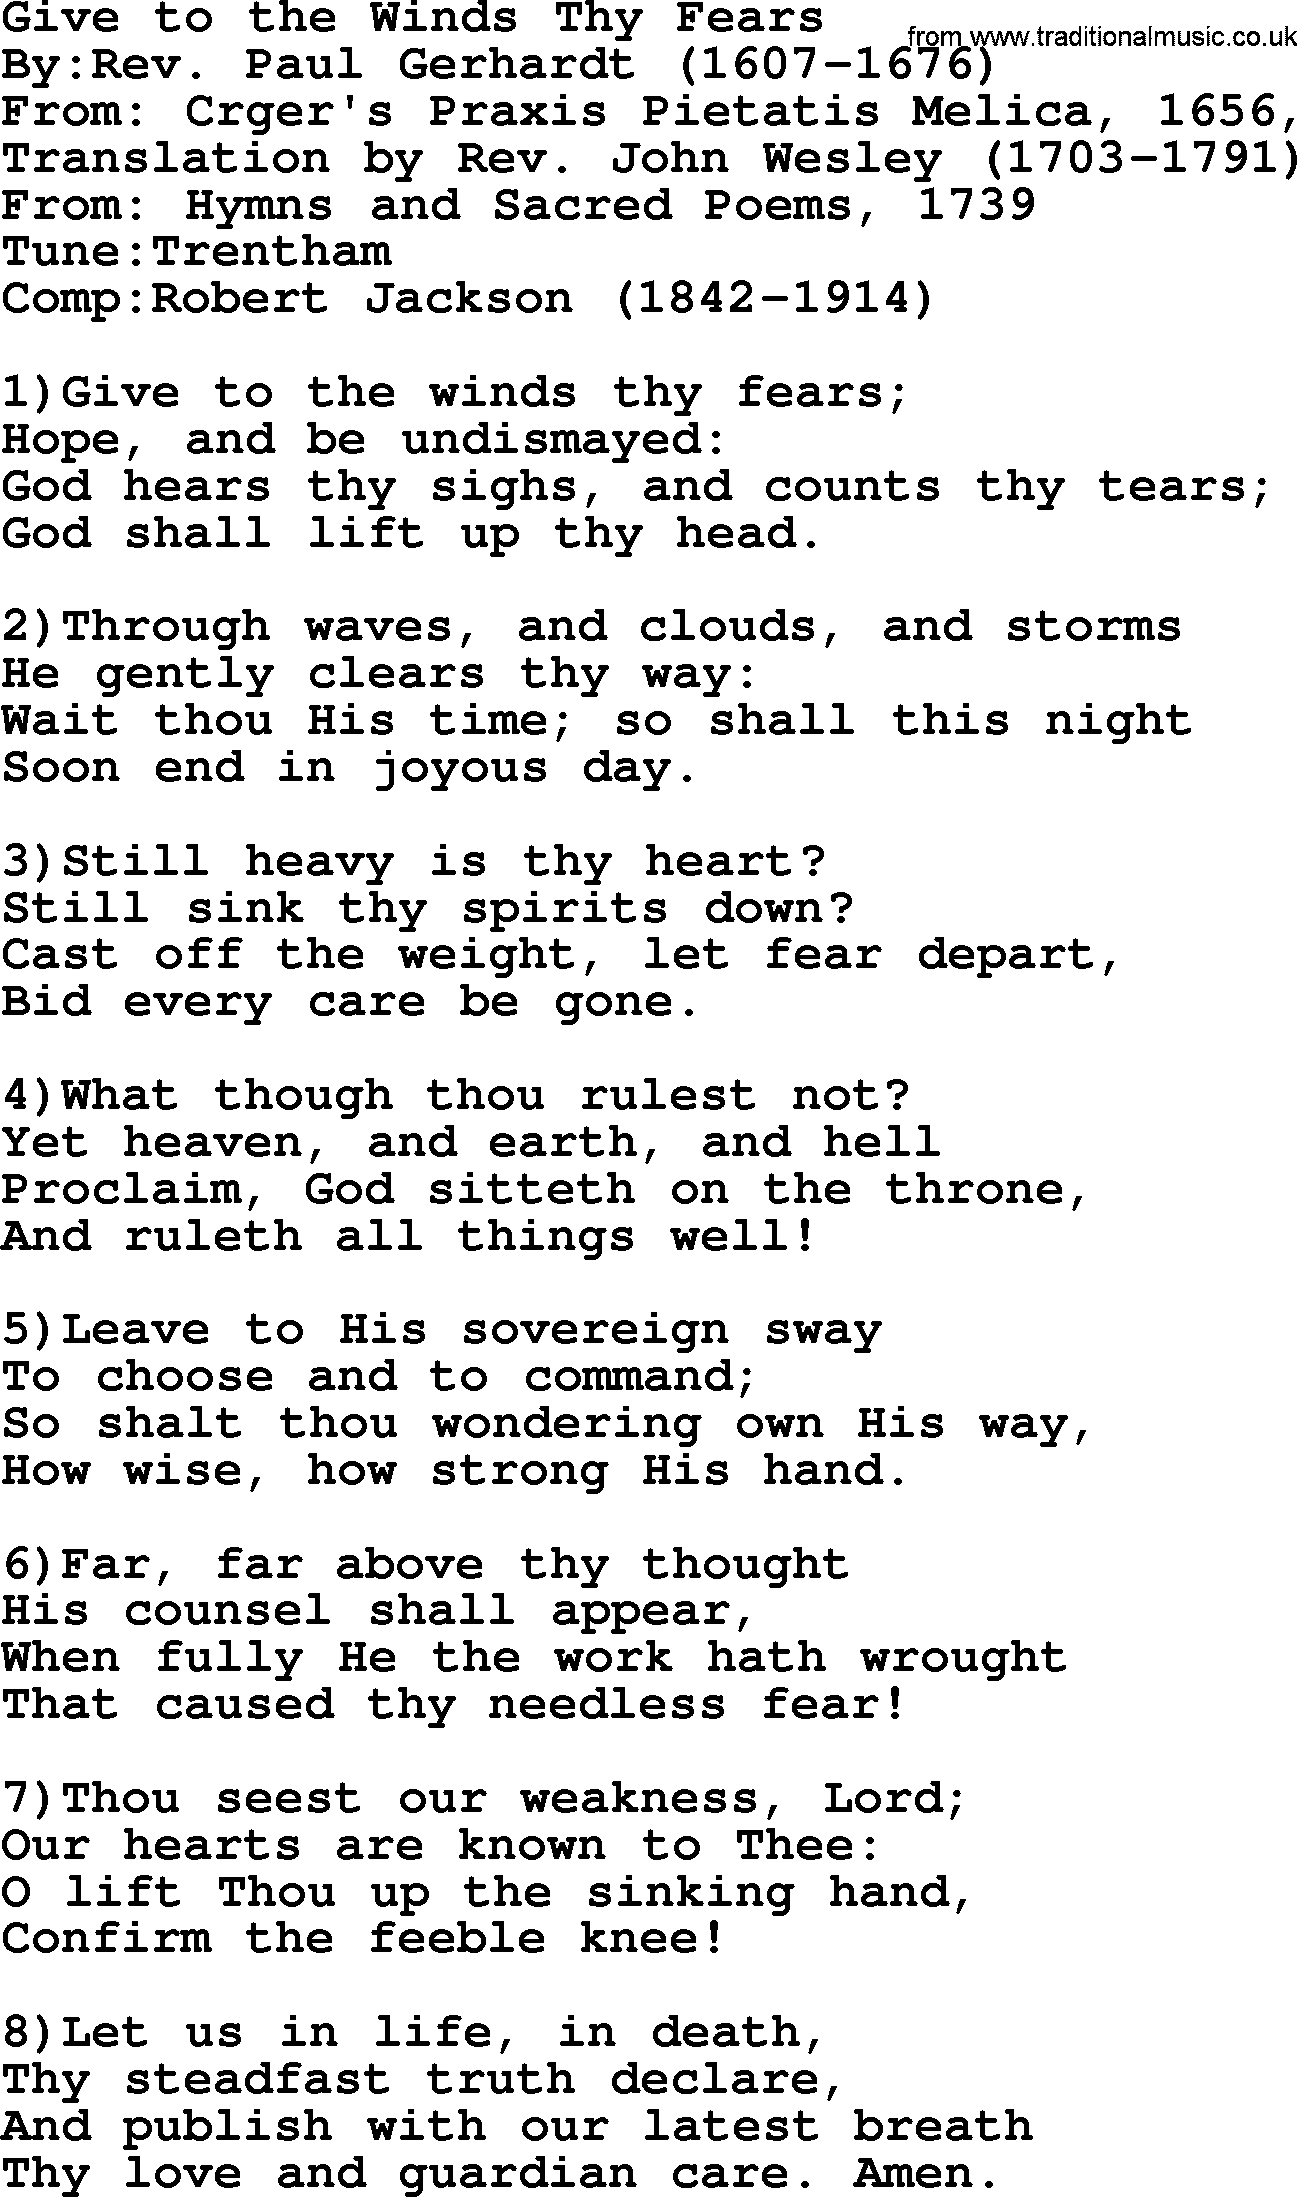 Methodist Hymn: Give To The Winds Thy Fears, lyrics